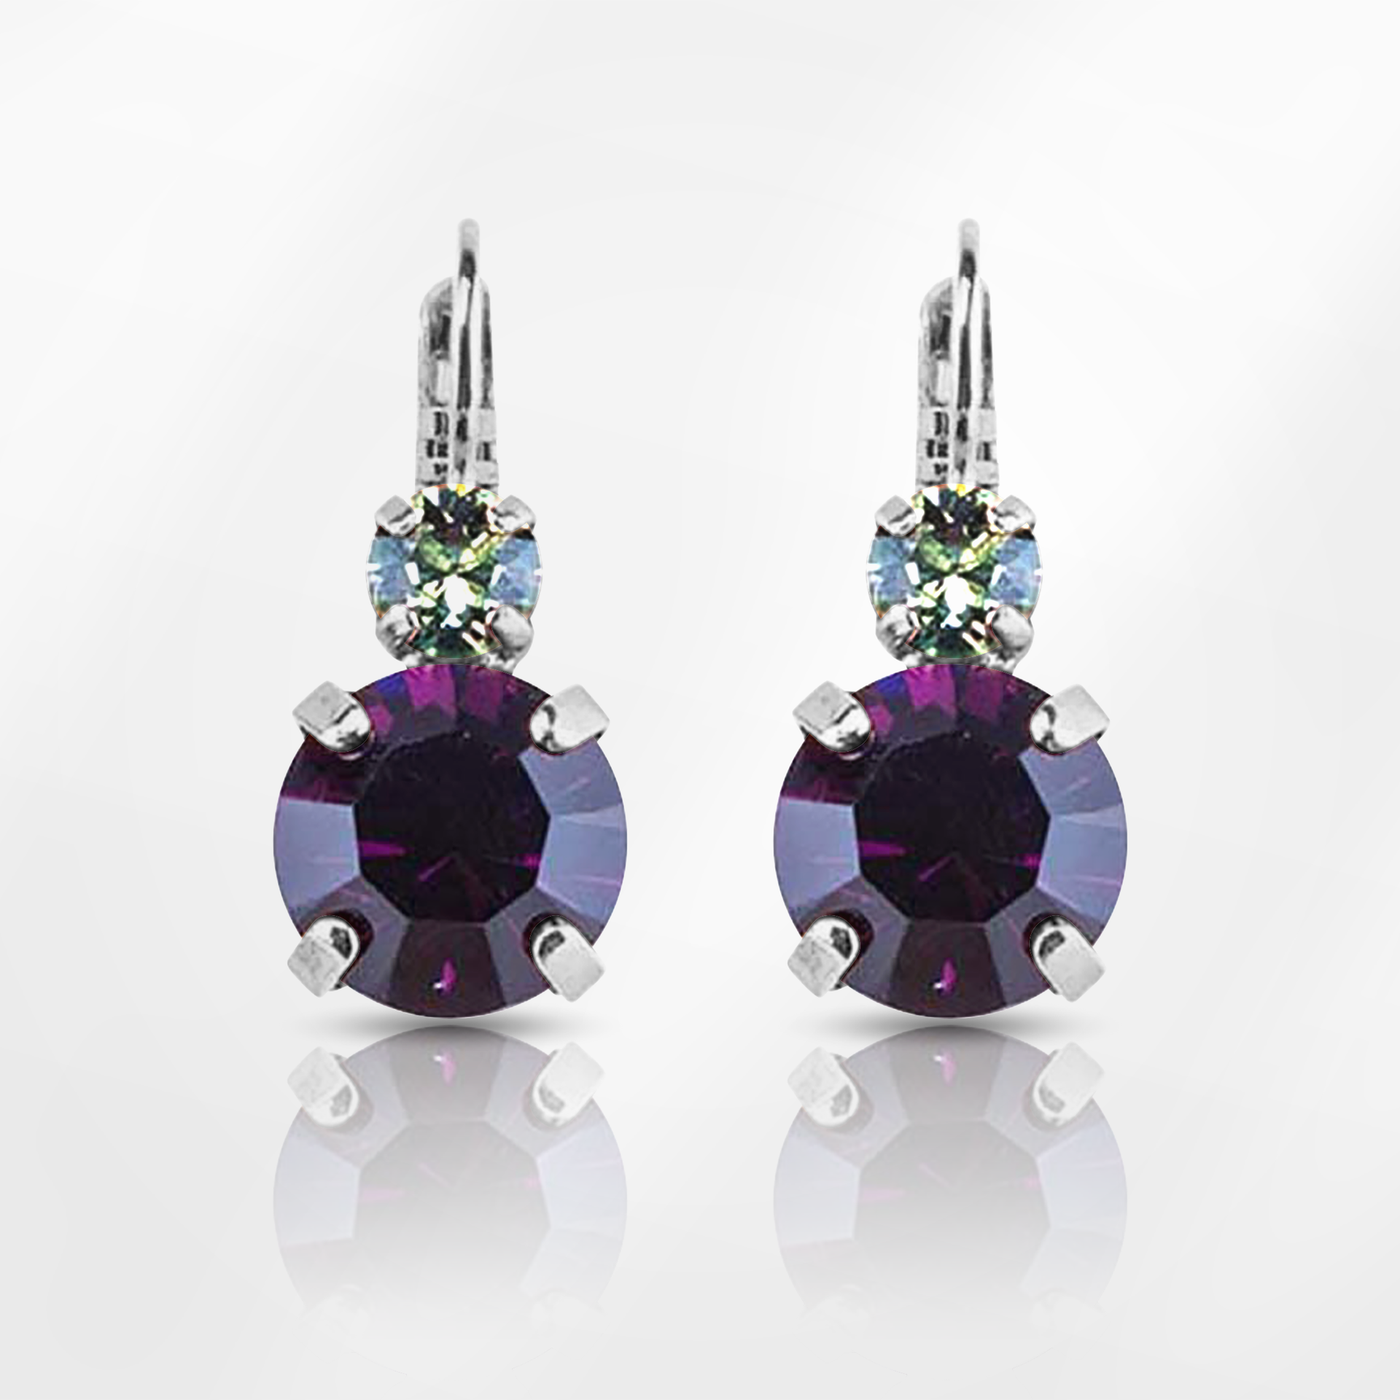 Lovable Double Stone Leverback "Enchanted" Earrings